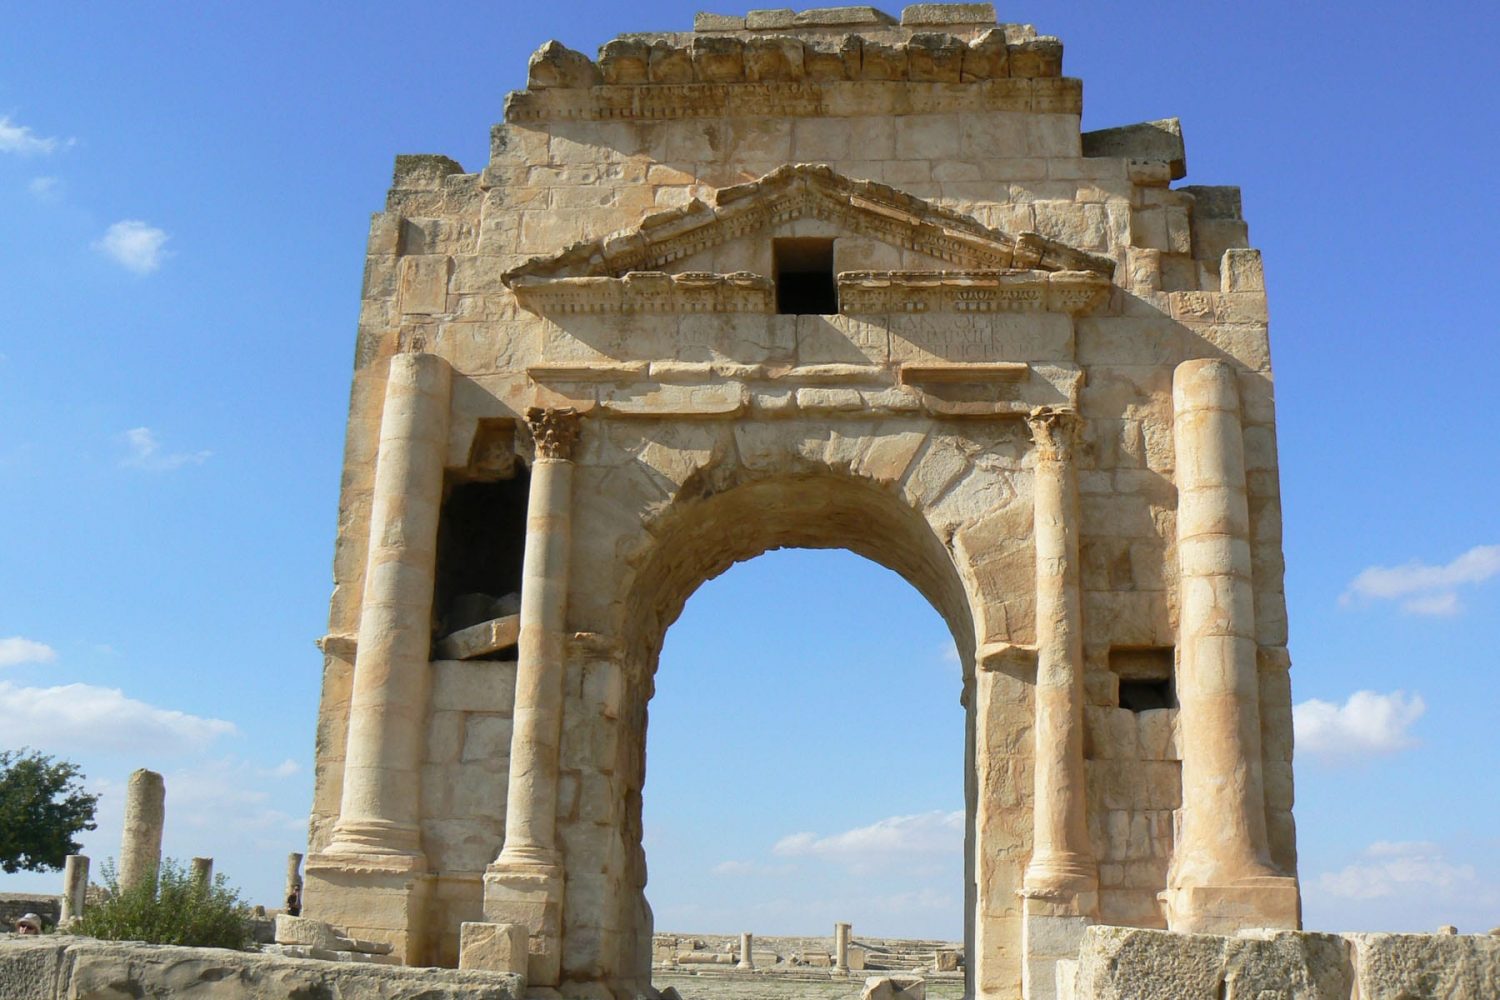 Makhtar ruins